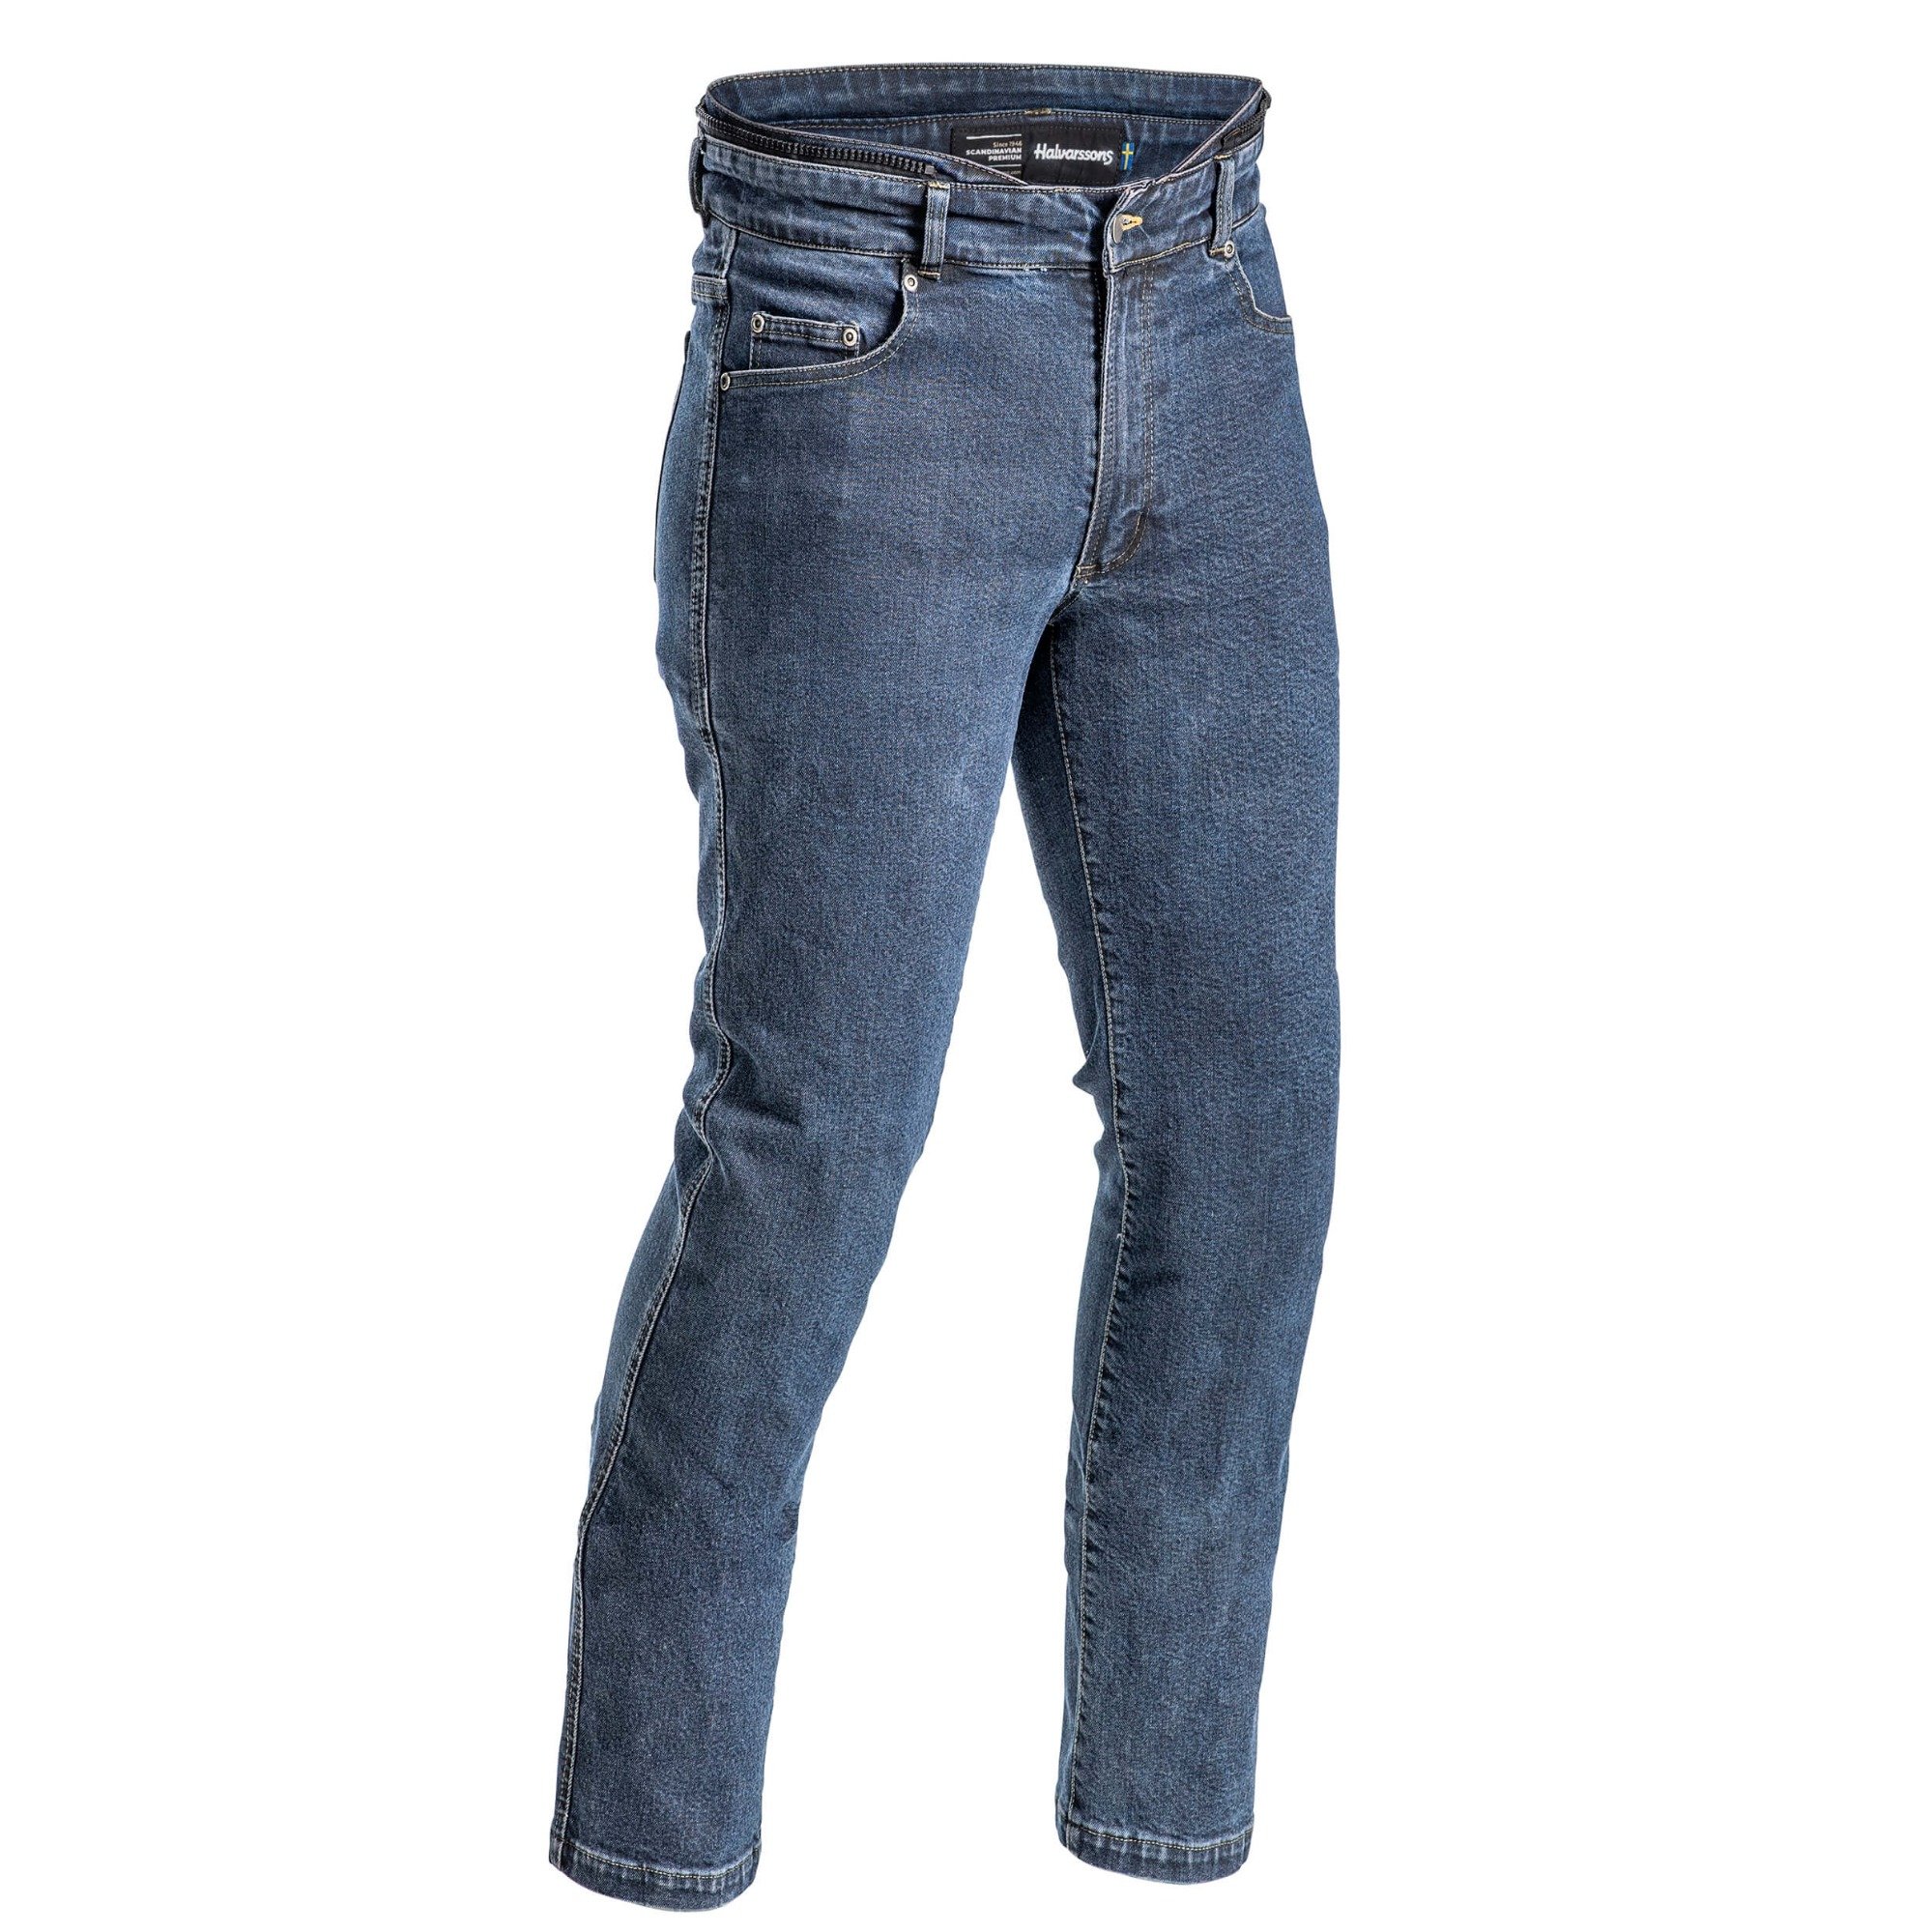 Image of Halvarssons Jeans Rogen Blue Short Size 56 ID 6438235239065